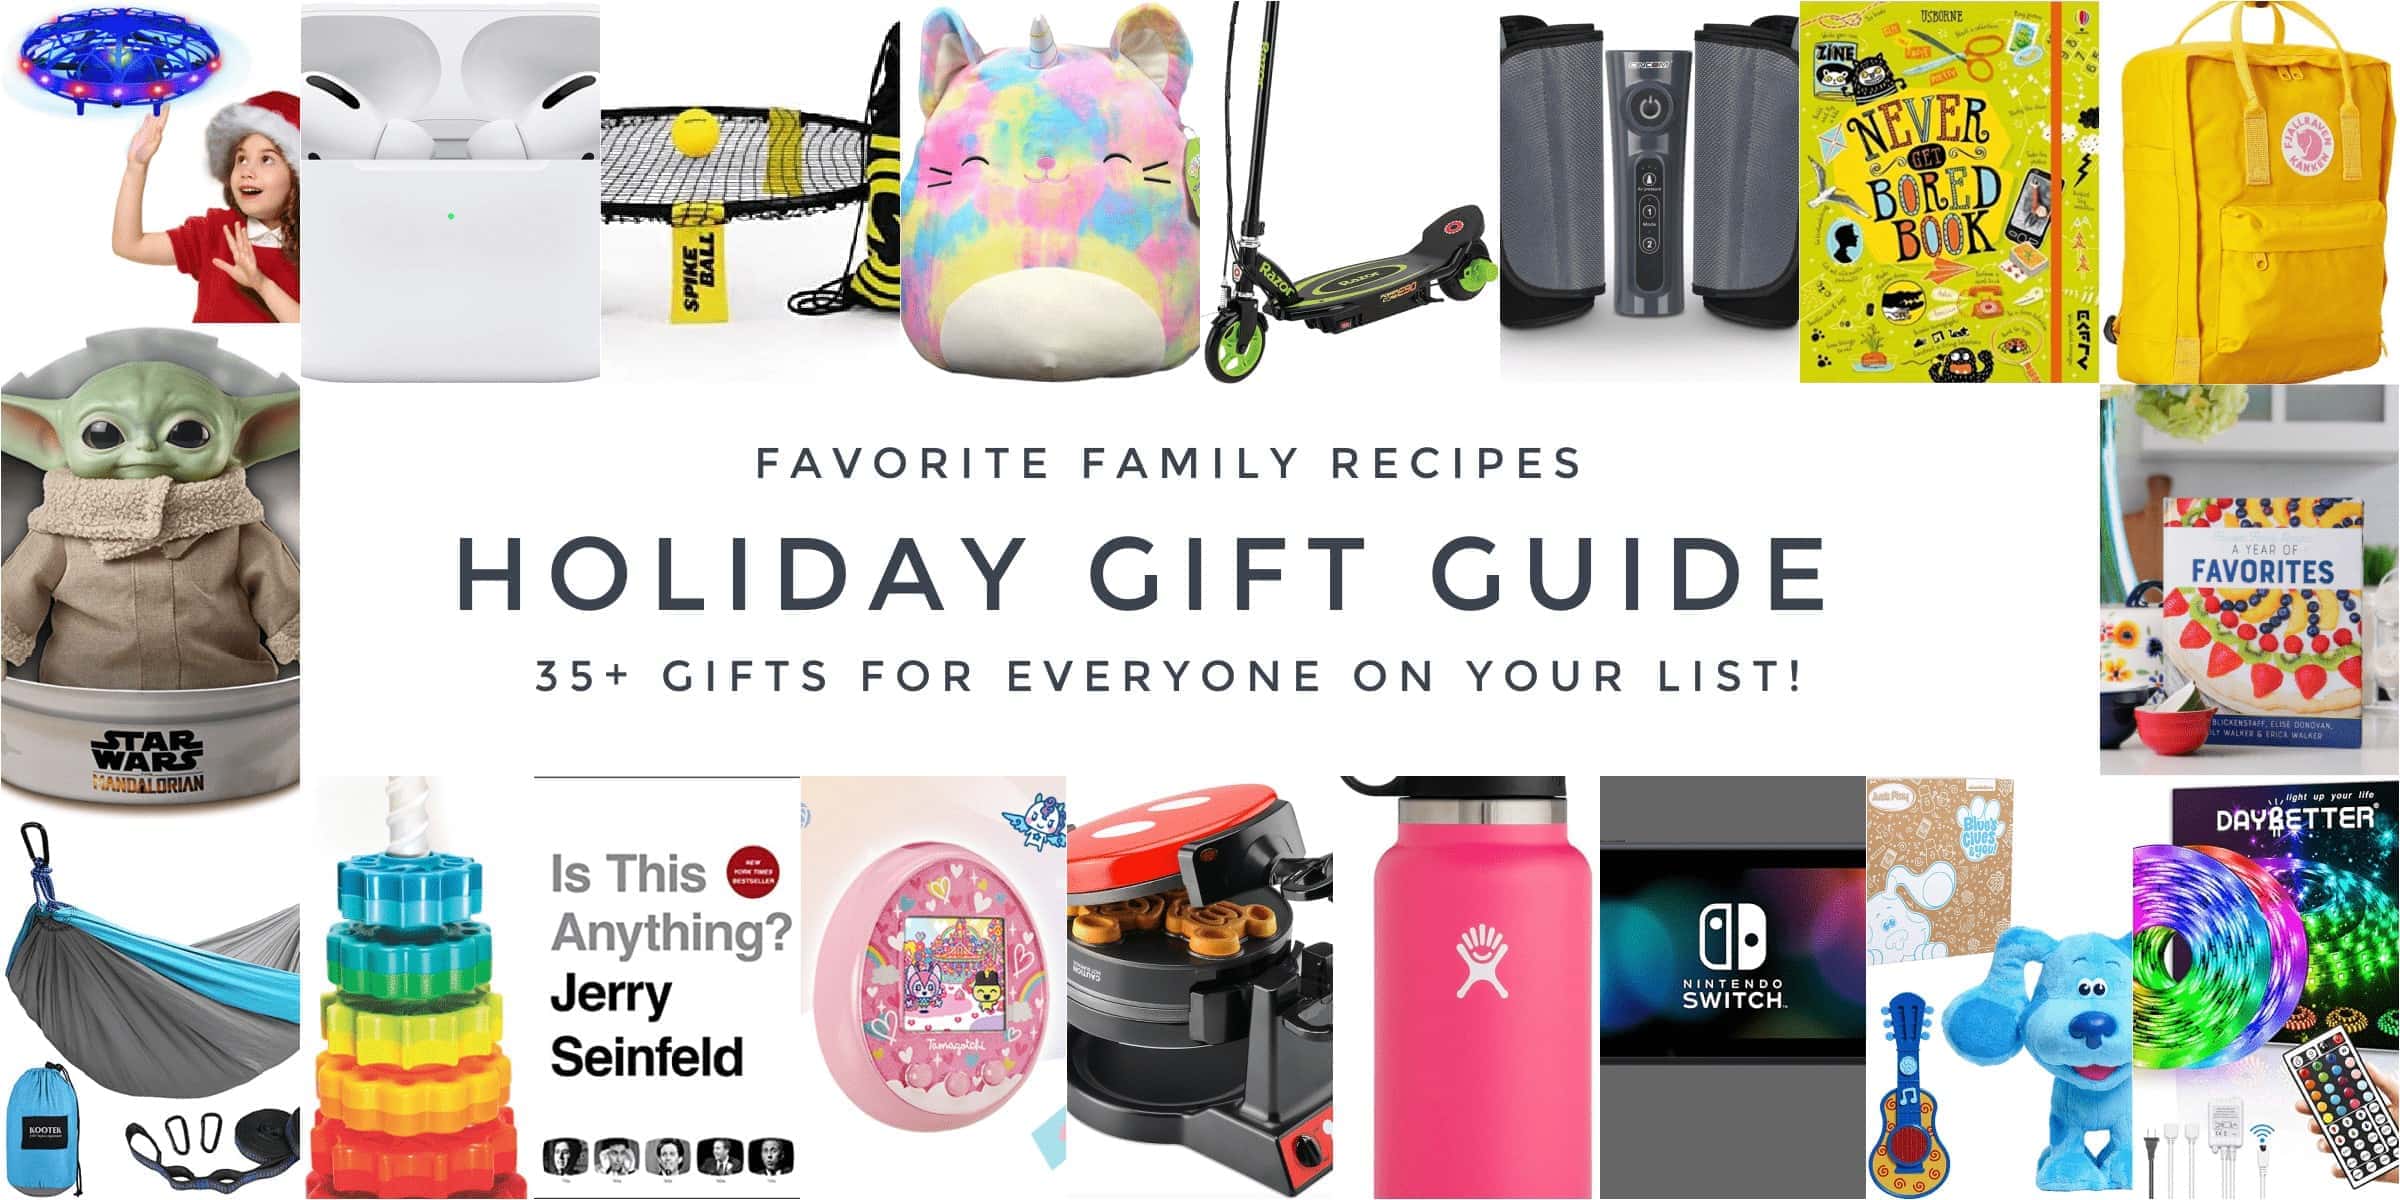 https://www.favfamilyrecipes.com/wp-content/uploads/2020/11/Holiday-Gift-Guide.jpg